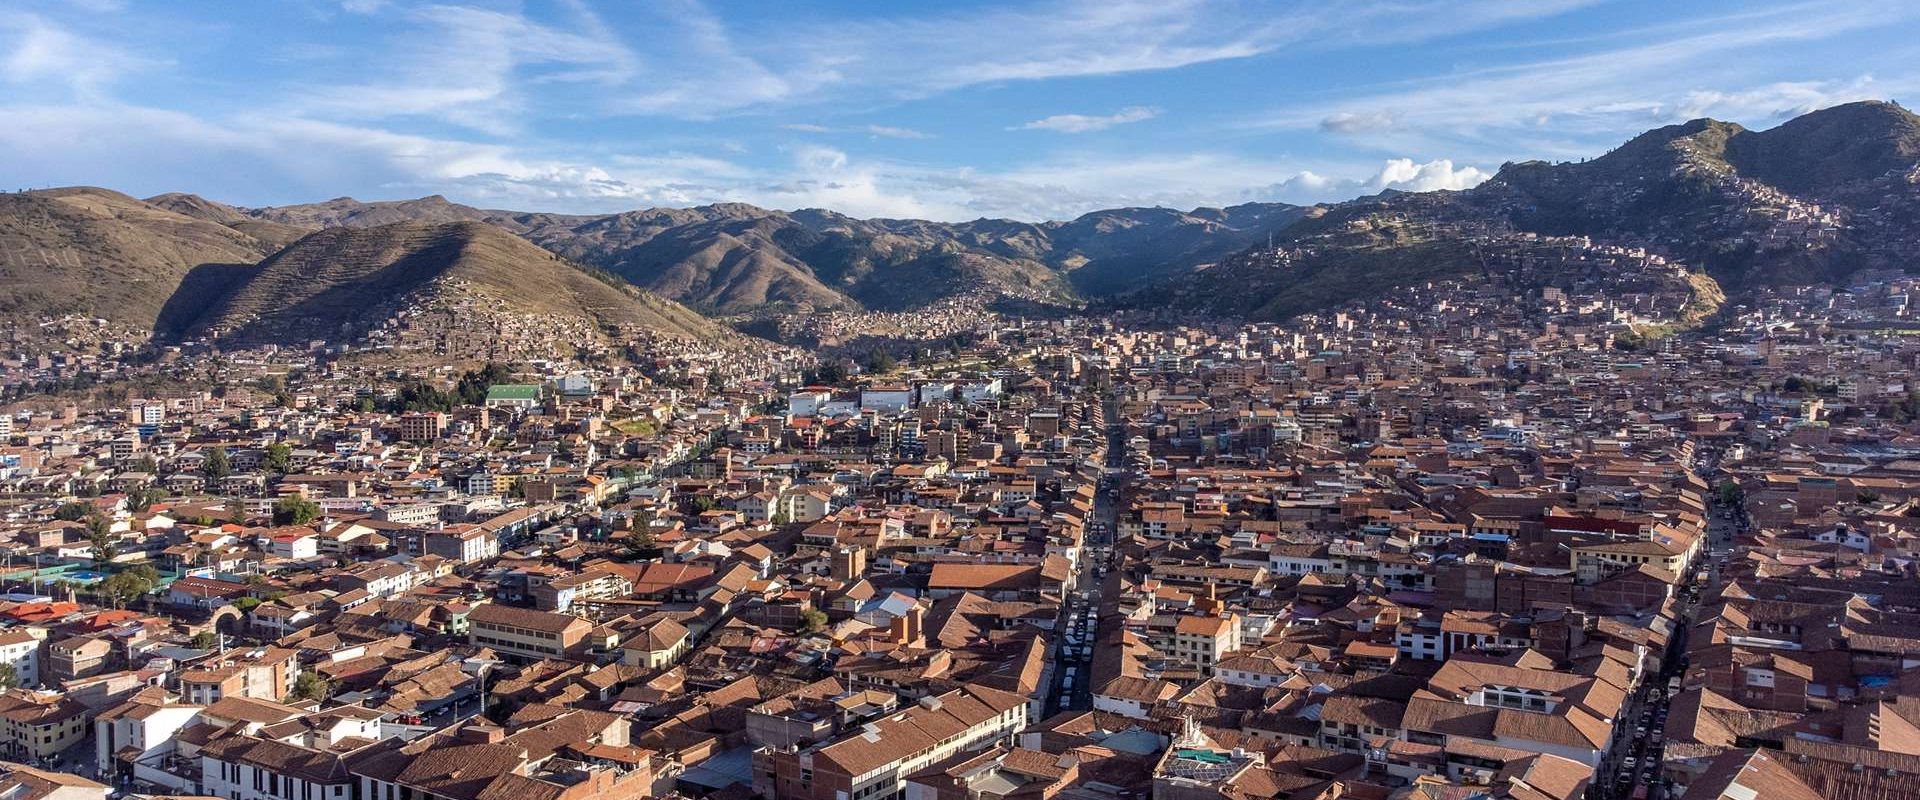 Aerial view of the city of Cusco. Peru